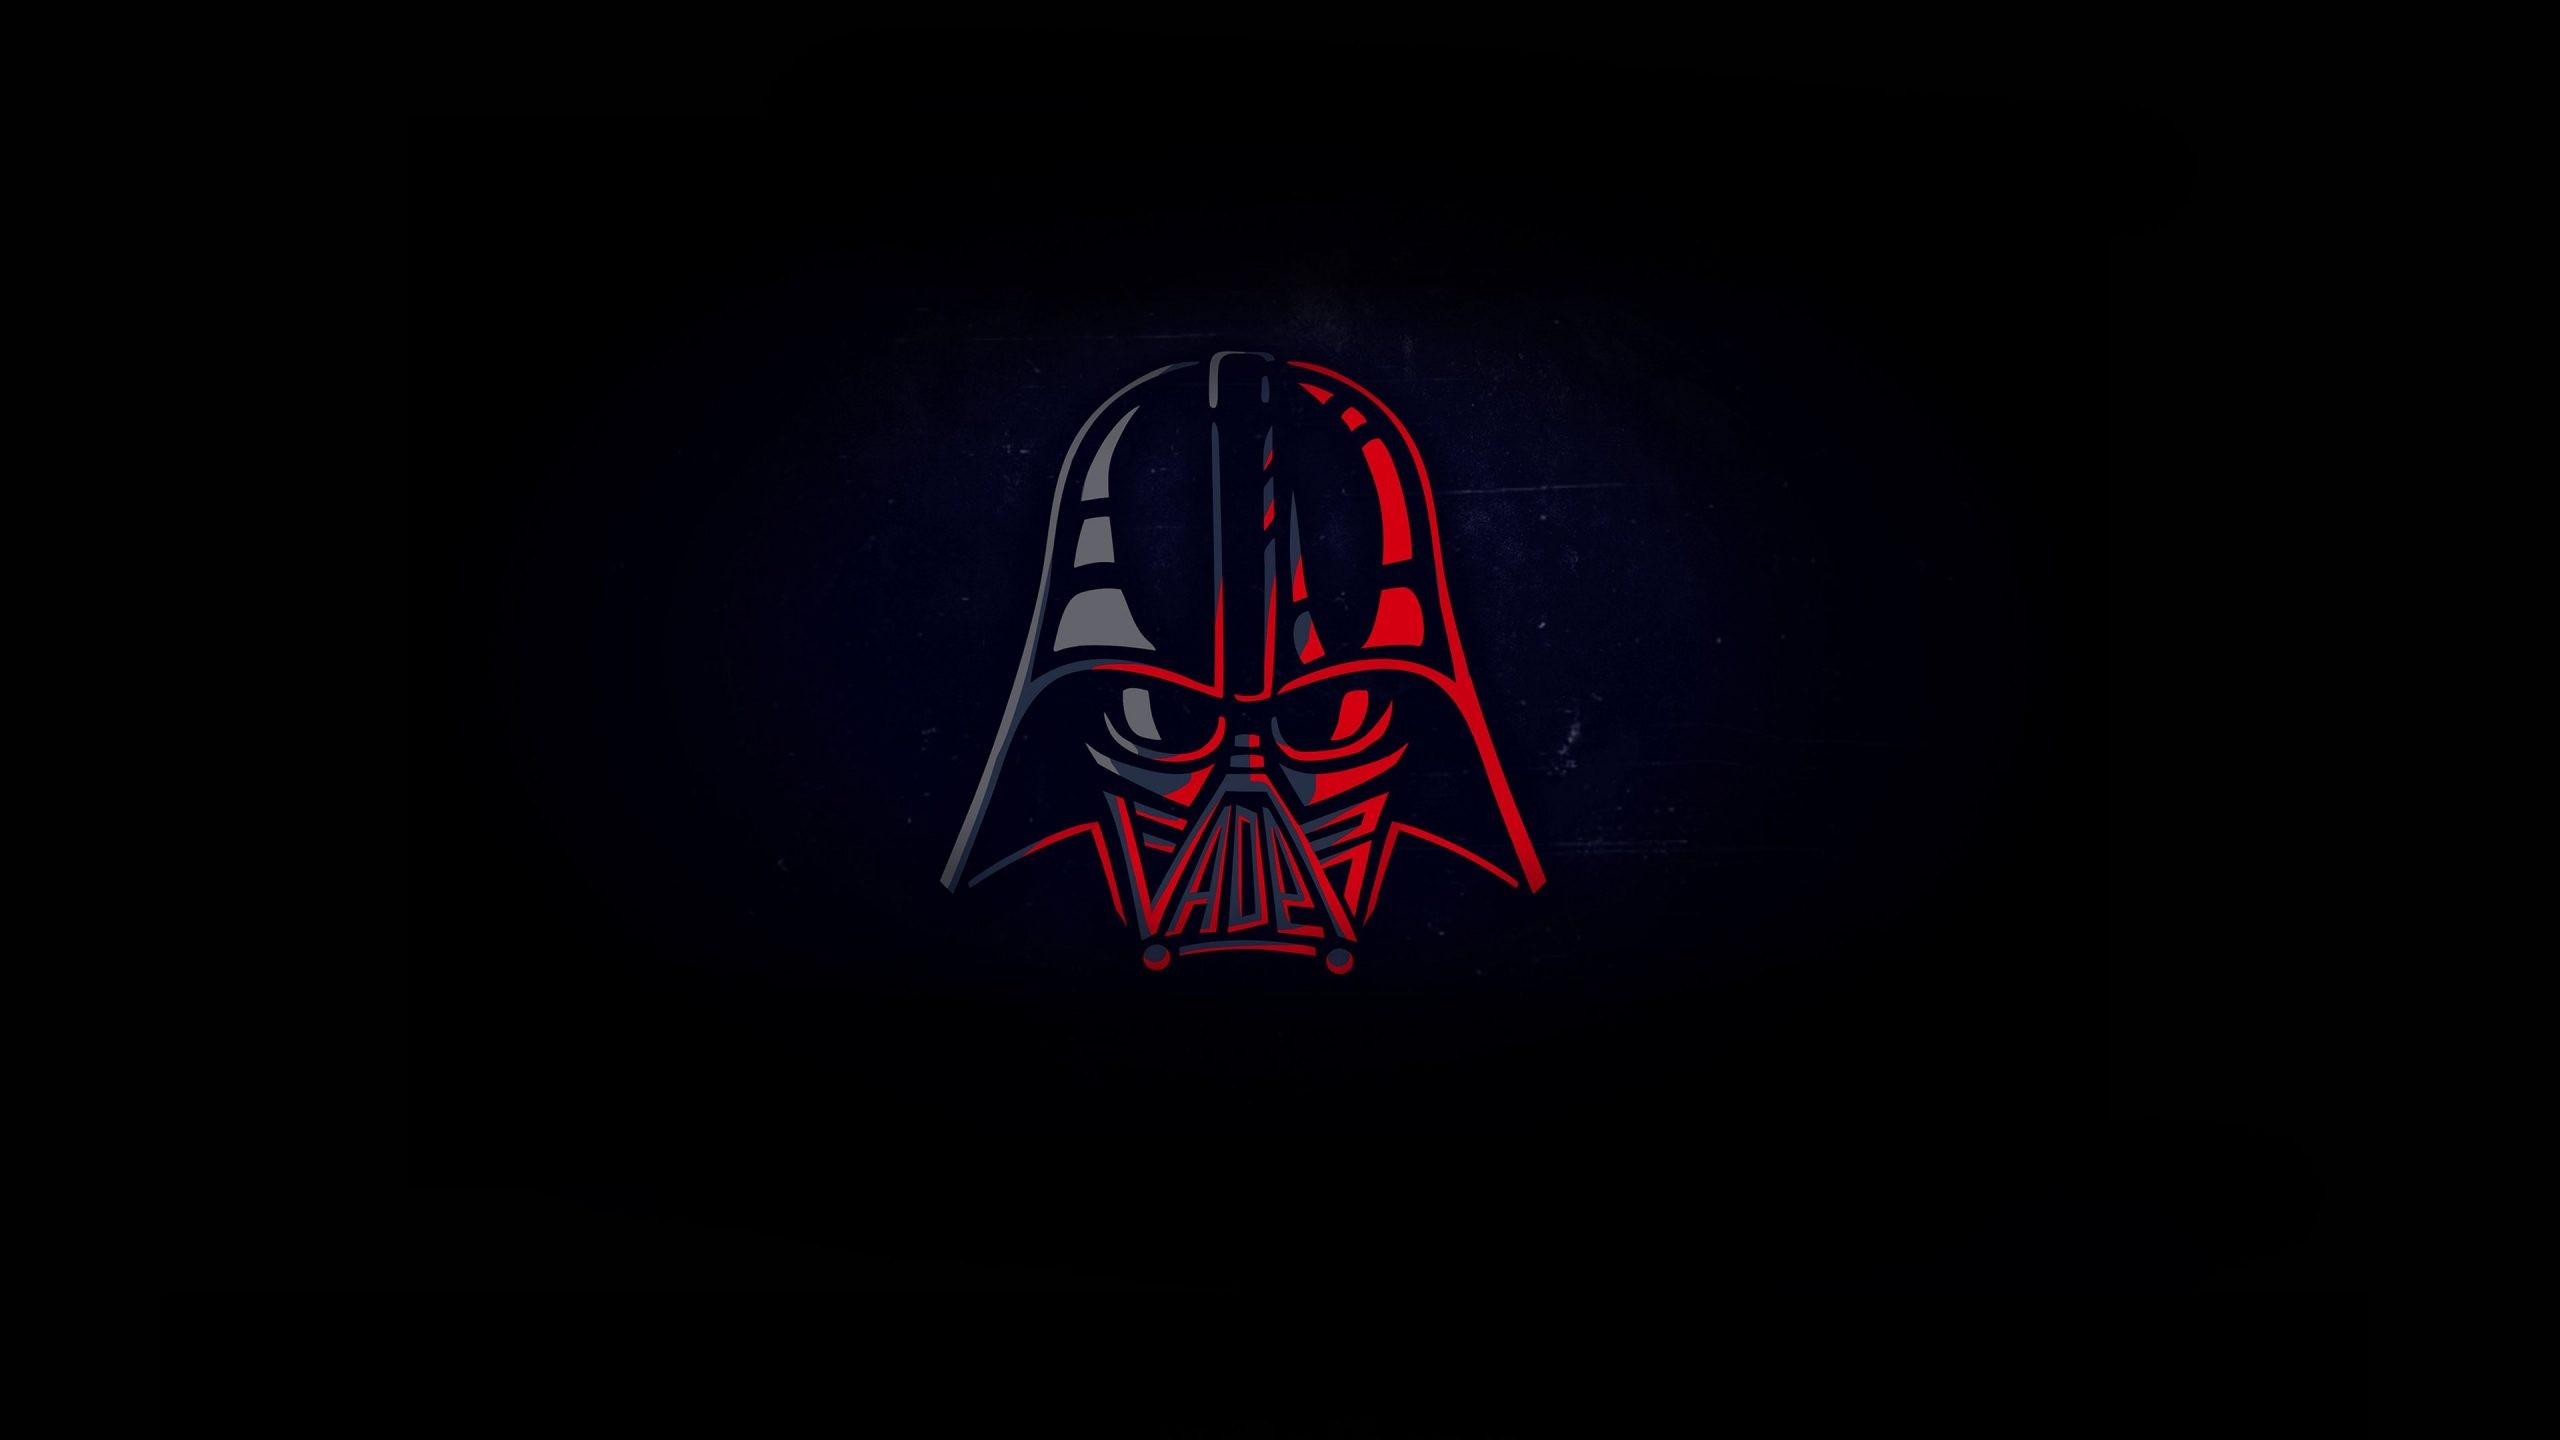 Darth Vader Wallpaper - NawPic